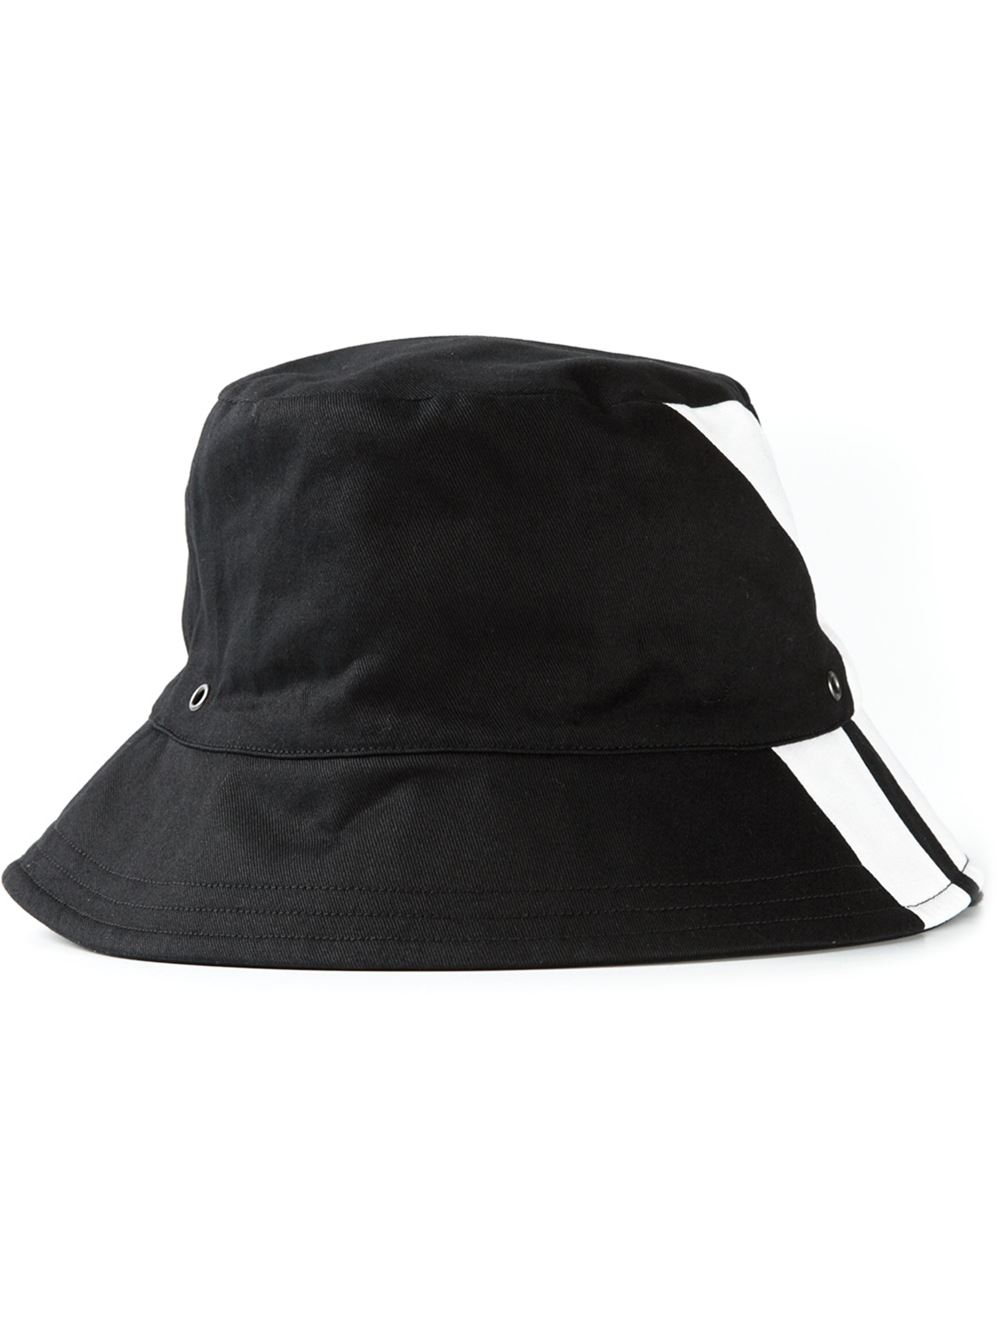 Y-3 Bucket Hat in Black for Men - Lyst